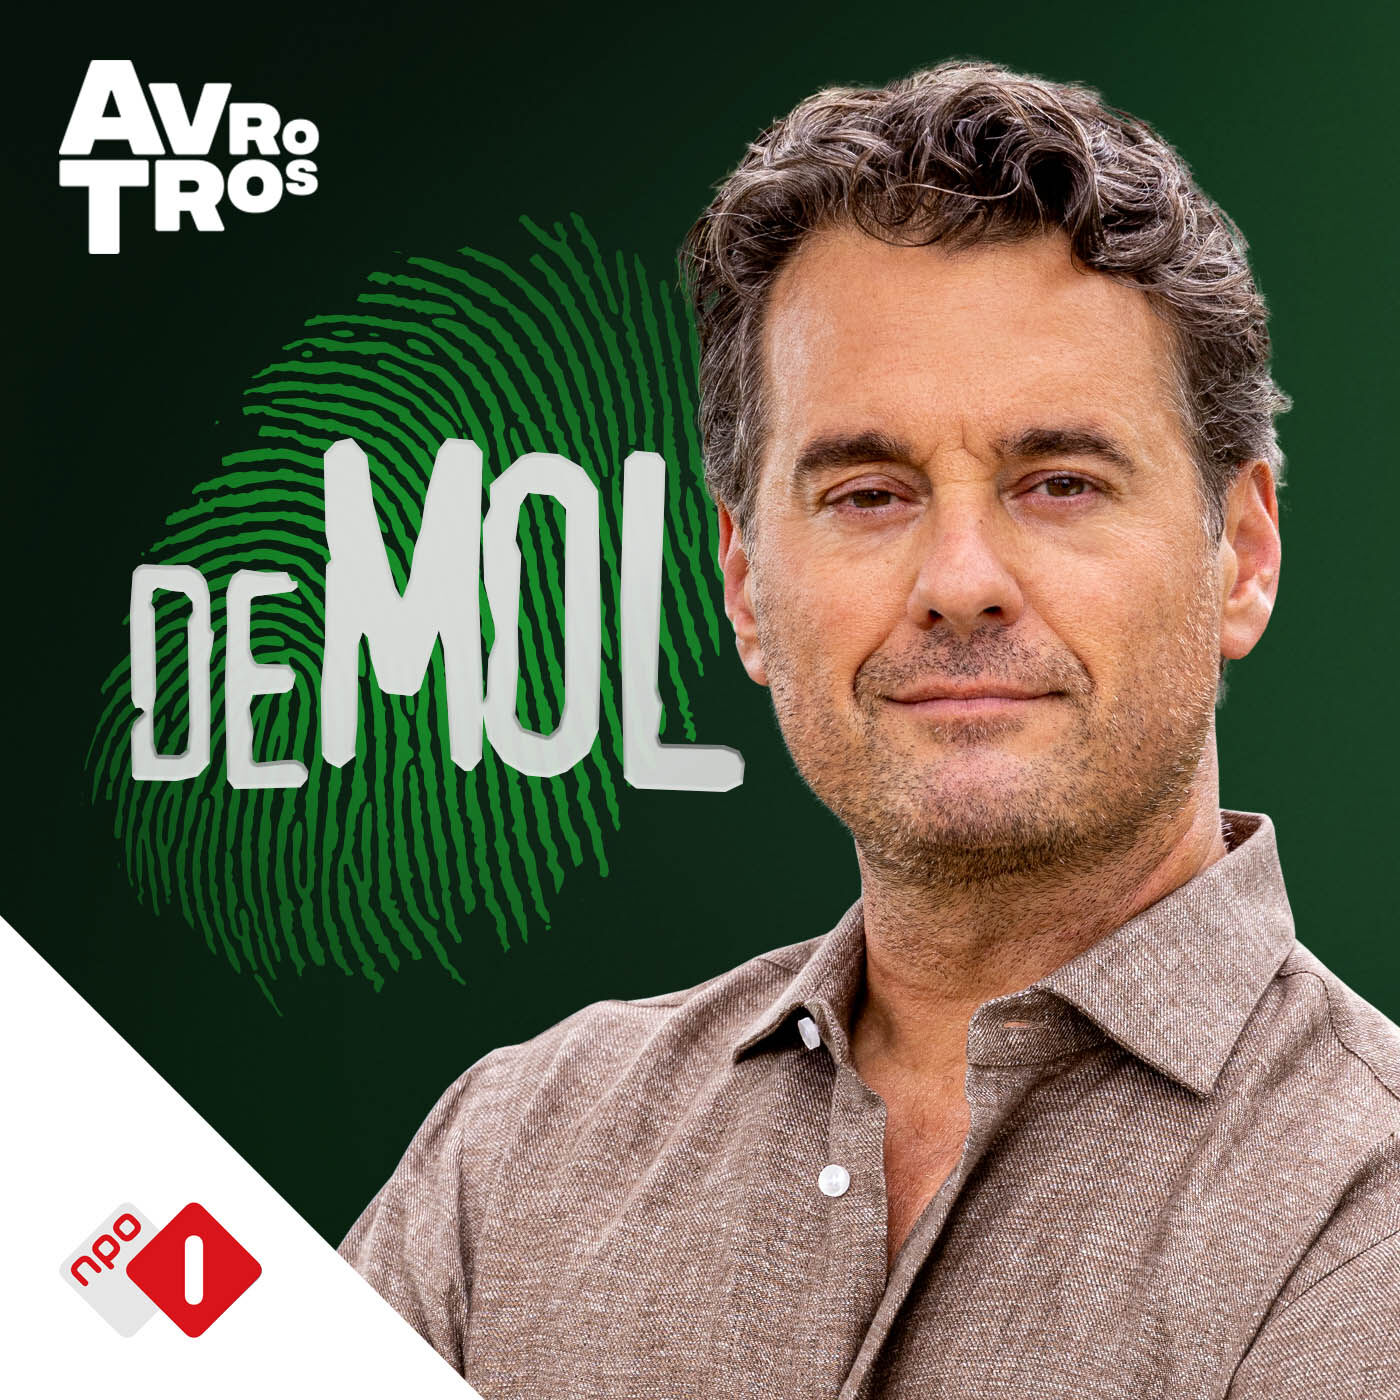 De Wie is de Mol? Podcast logo